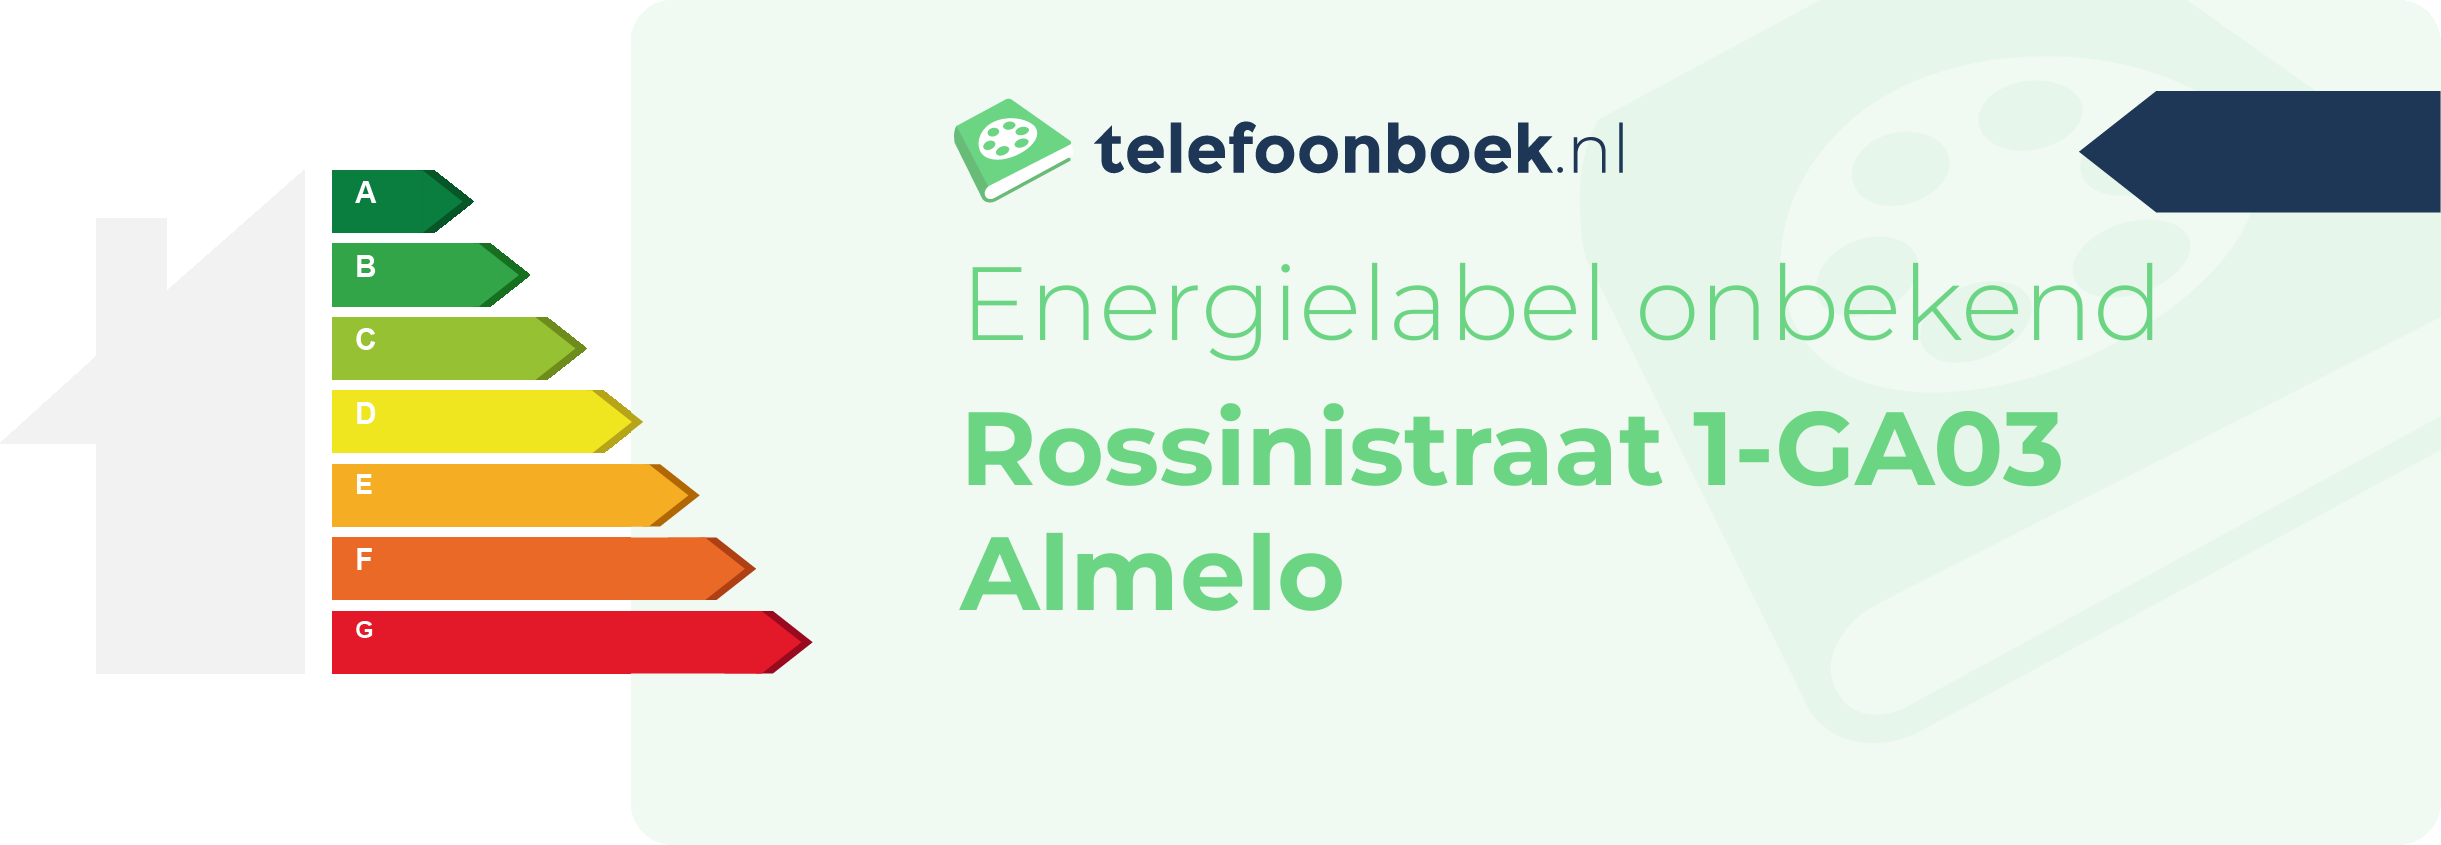 Energielabel Rossinistraat 1-GA03 Almelo